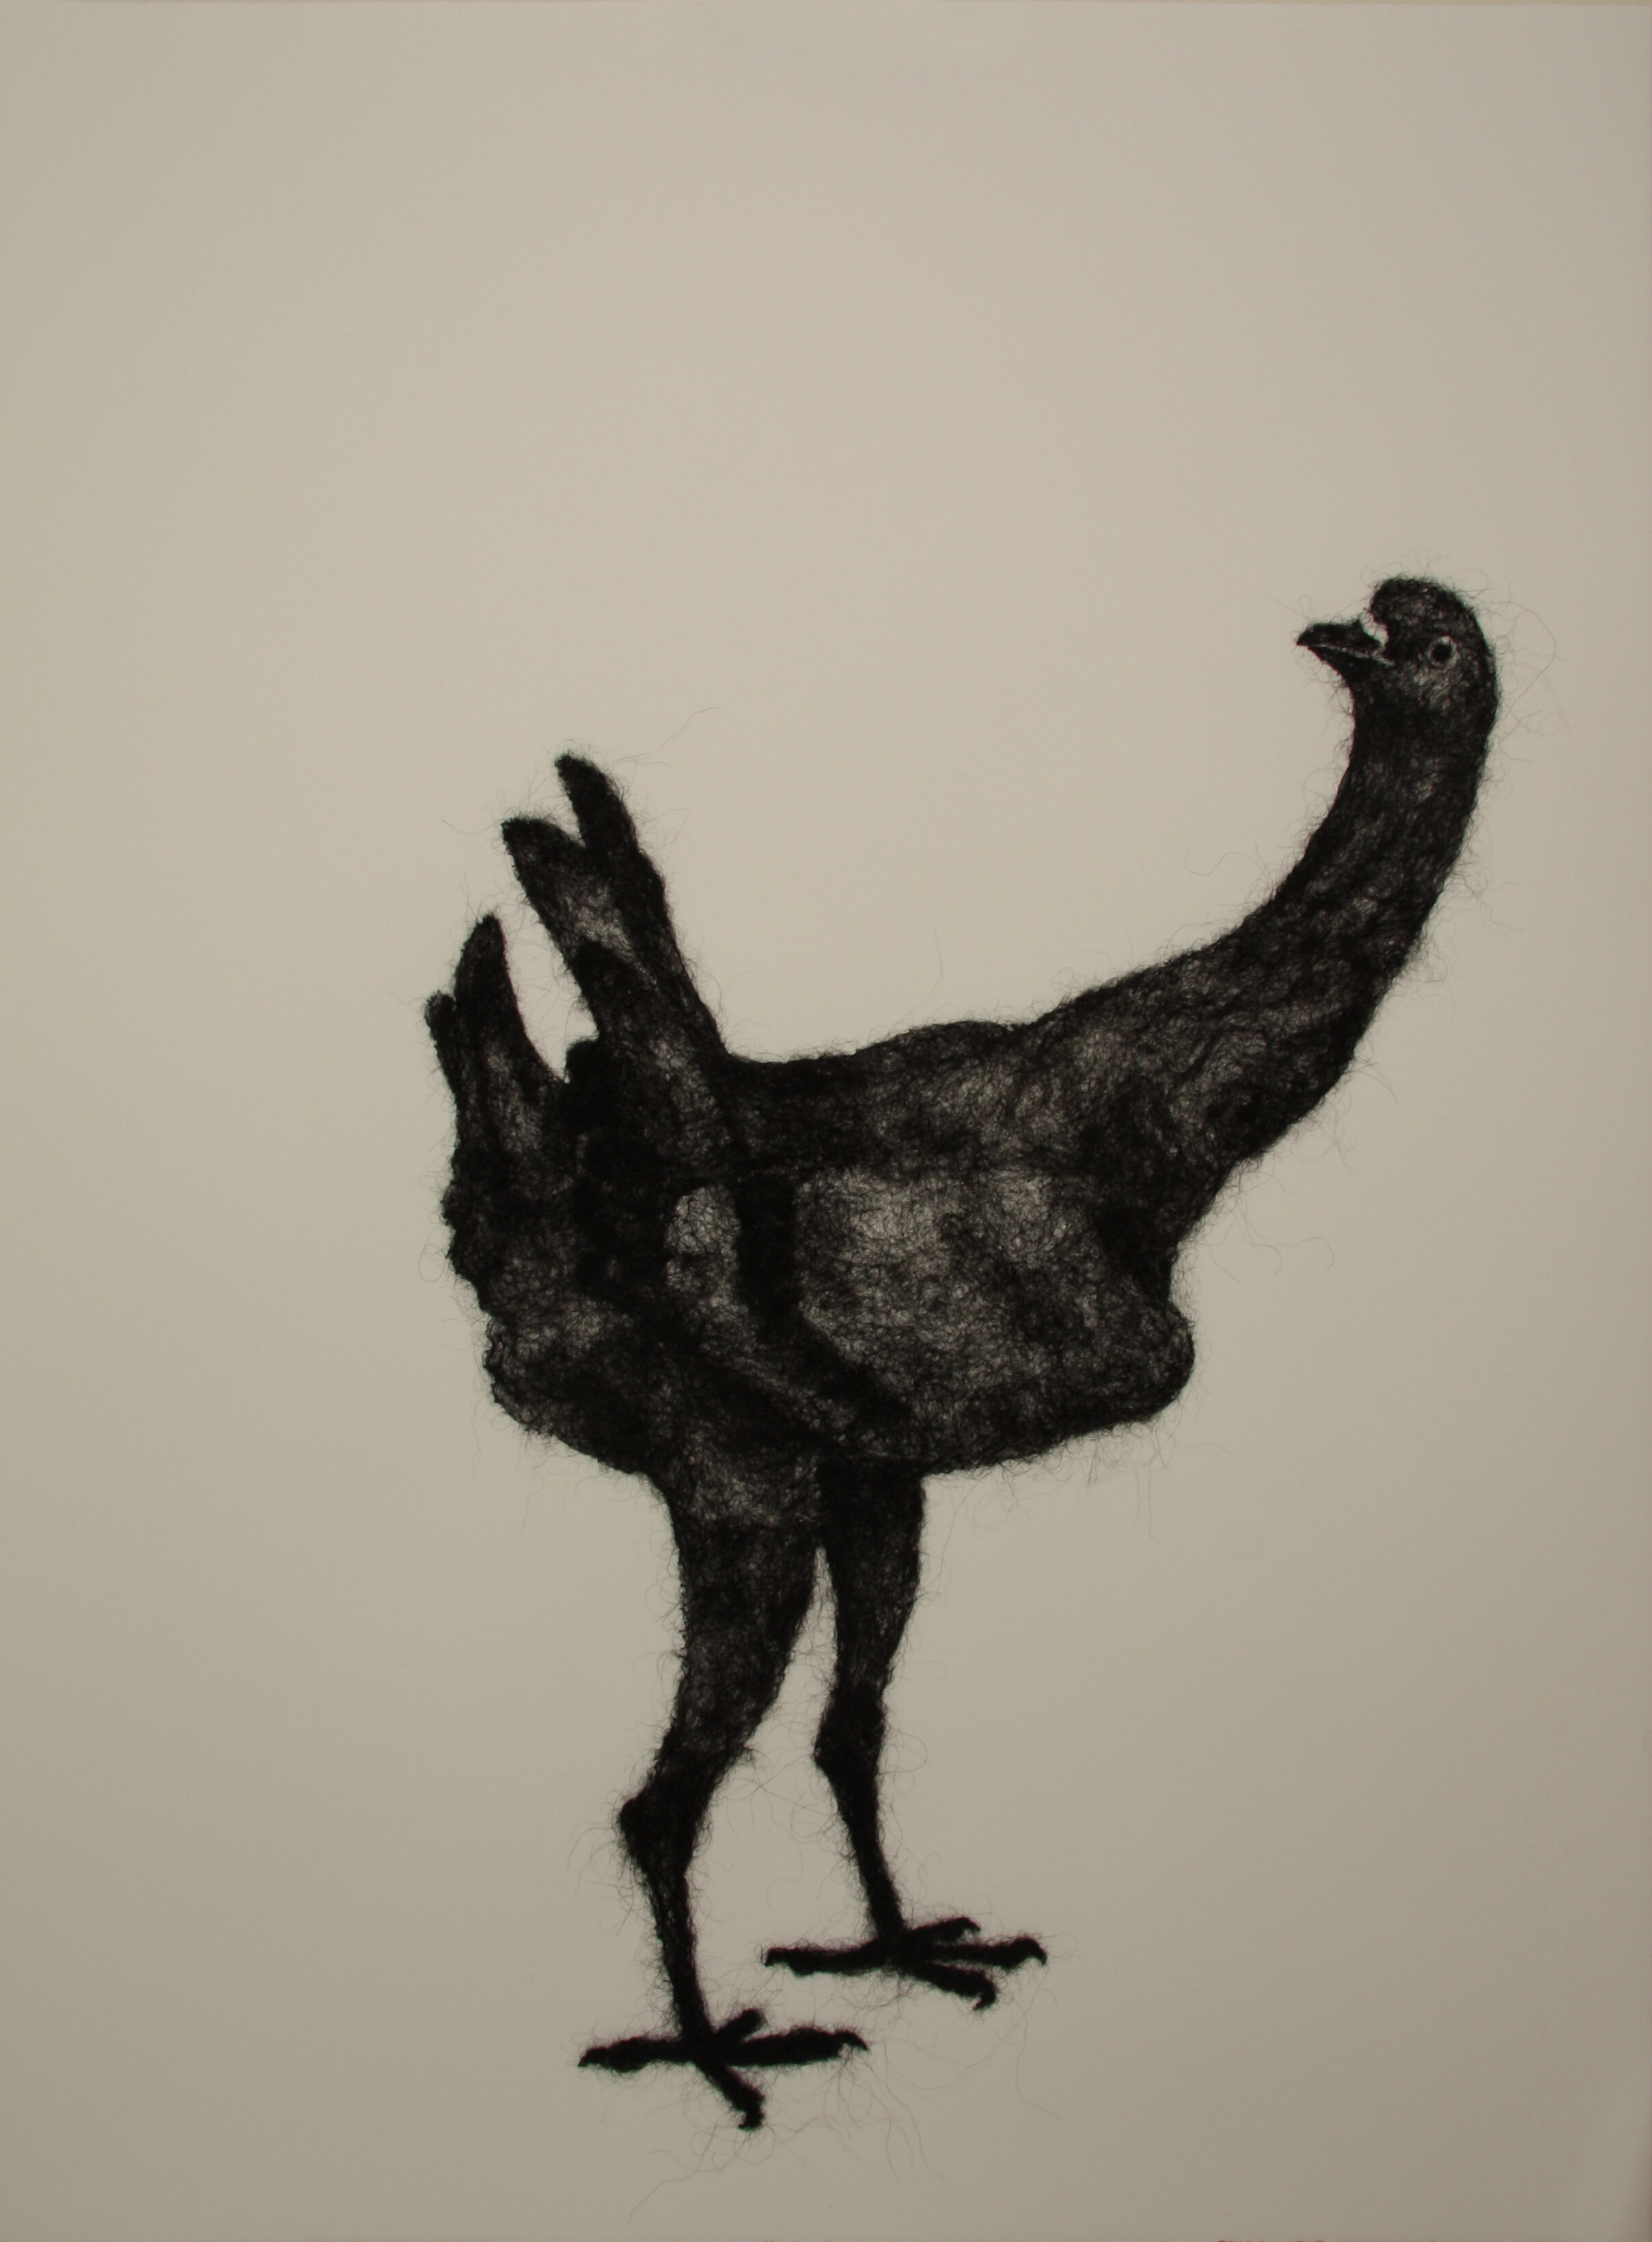 Maltese, wool through paper, 30" x 22", 2007